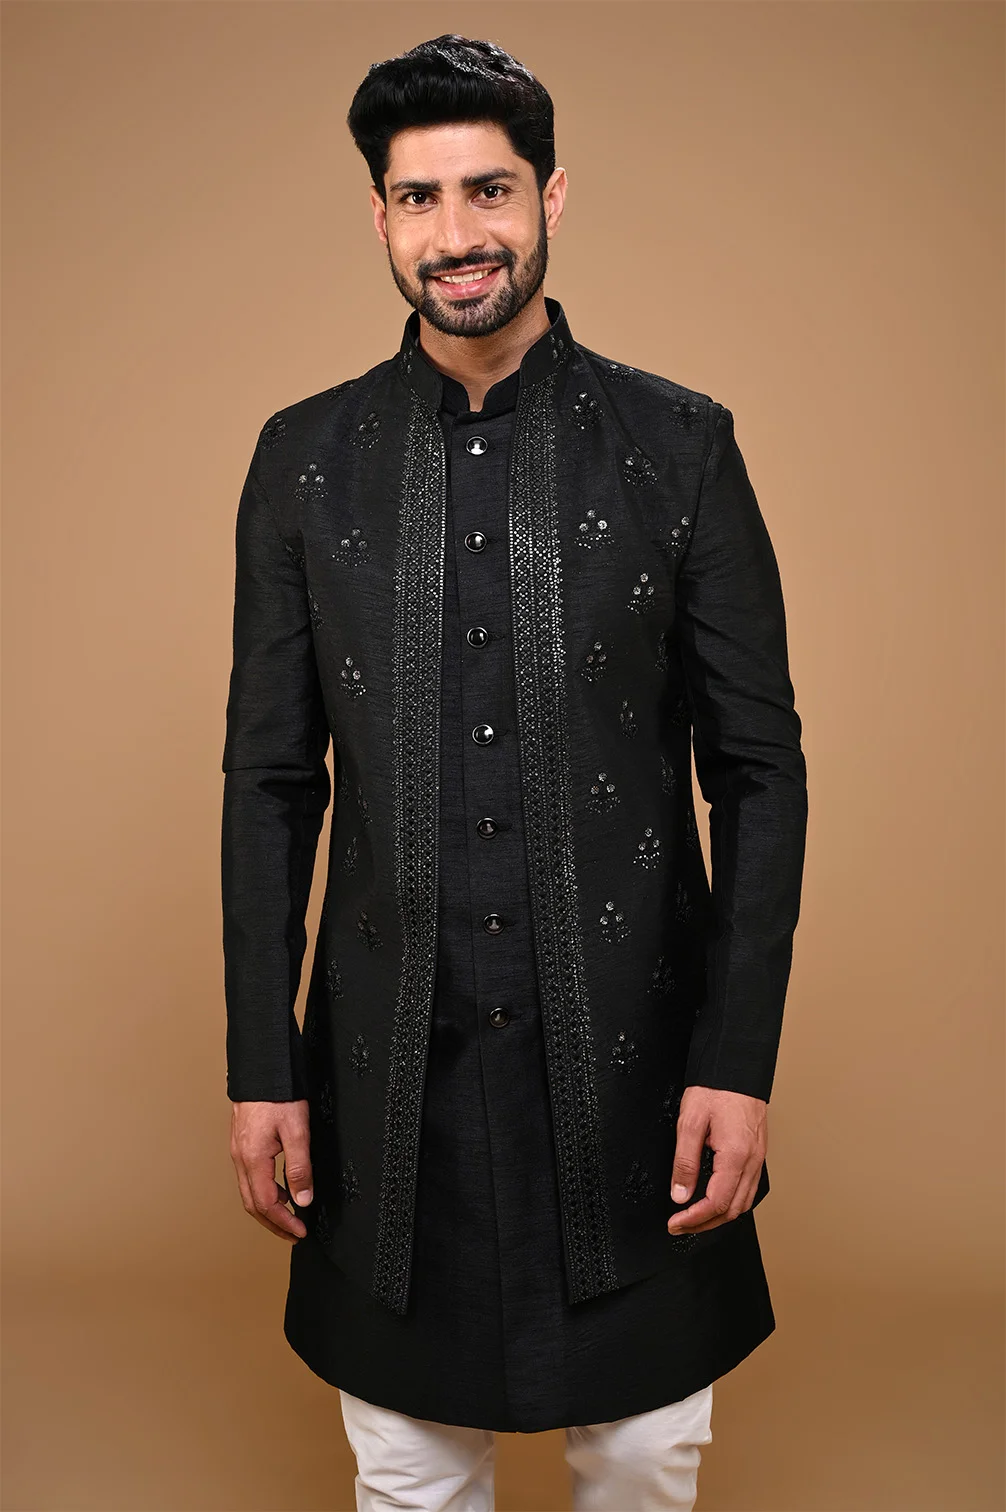 Nehru Jacket for Men - Buy Best Nehru Jackets for Men Online